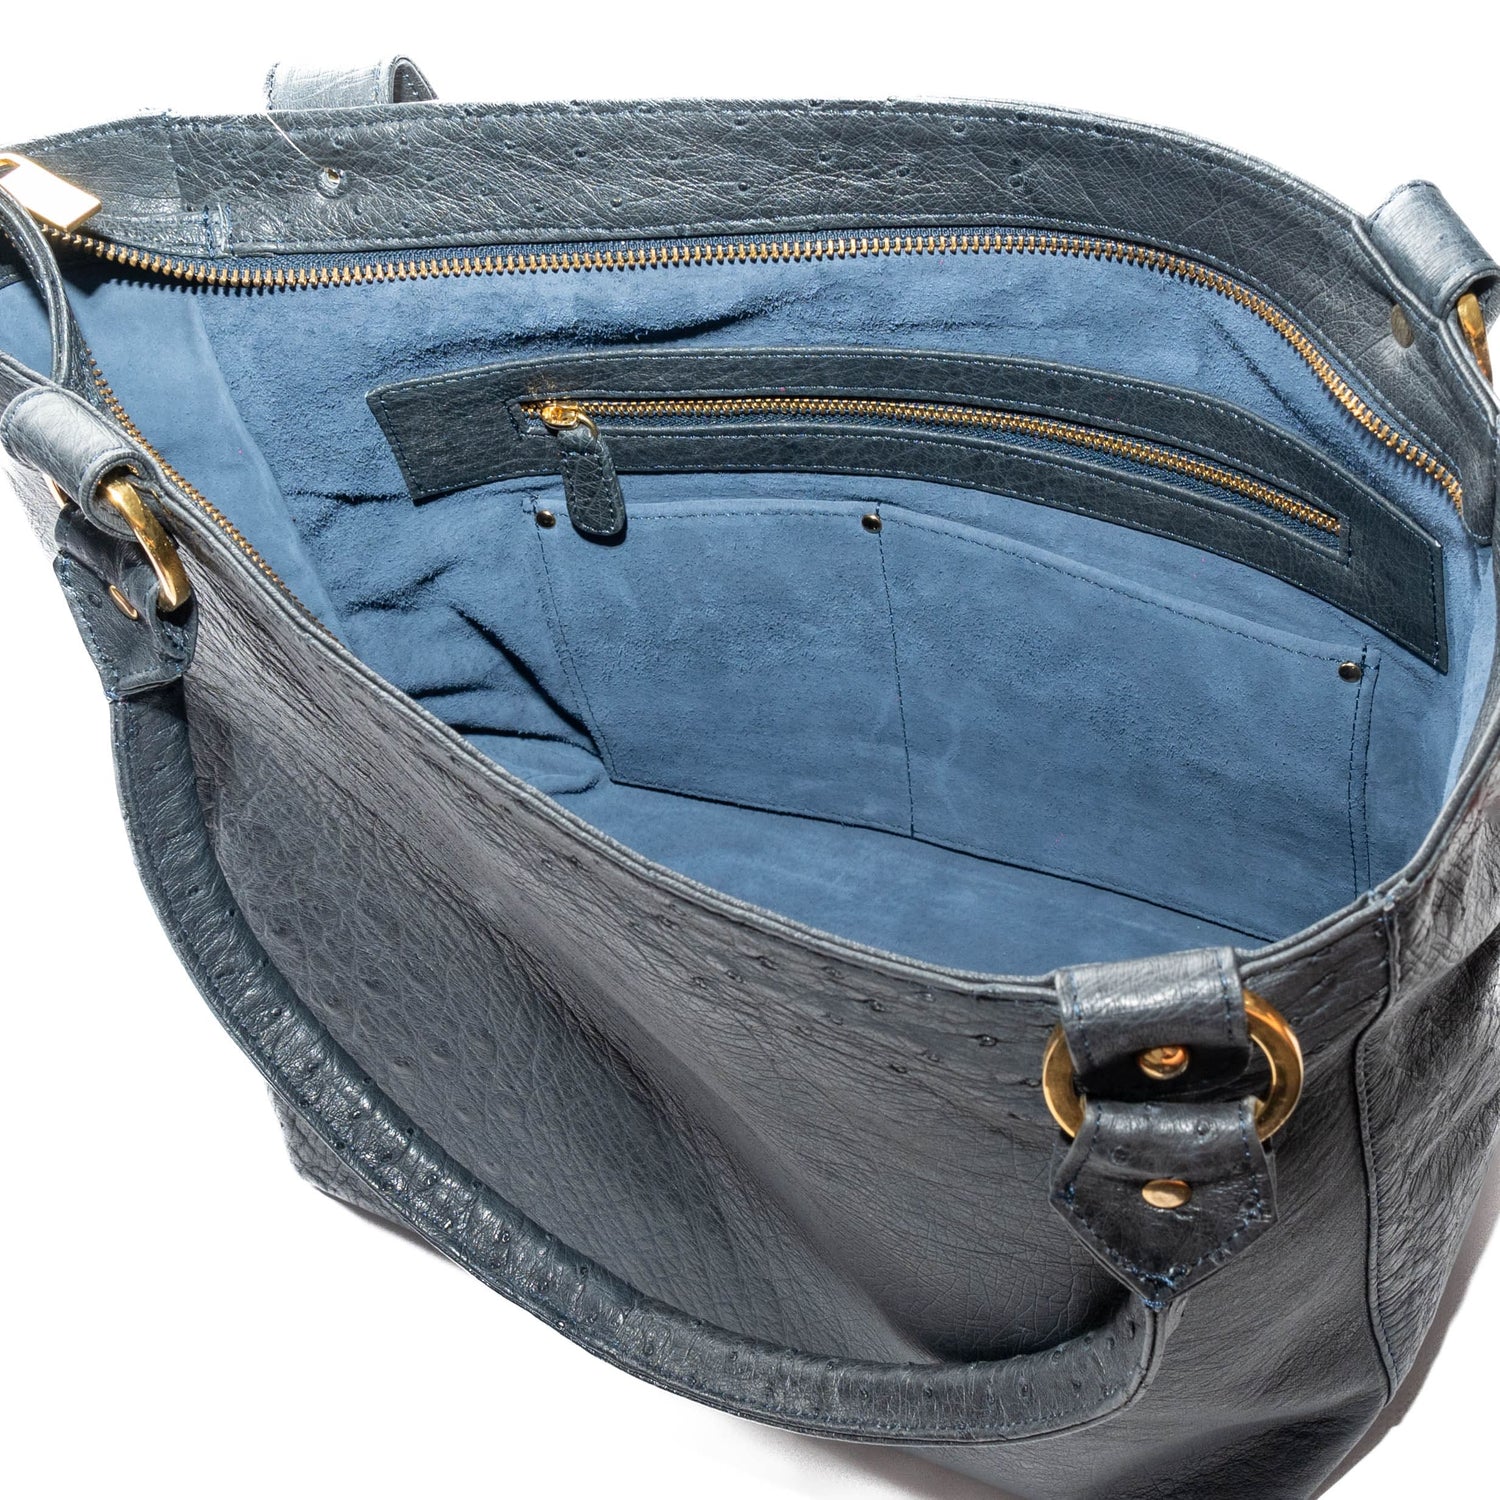 Karoo Ostrich Leather Tote Handbag - Ostrich Leather Bag